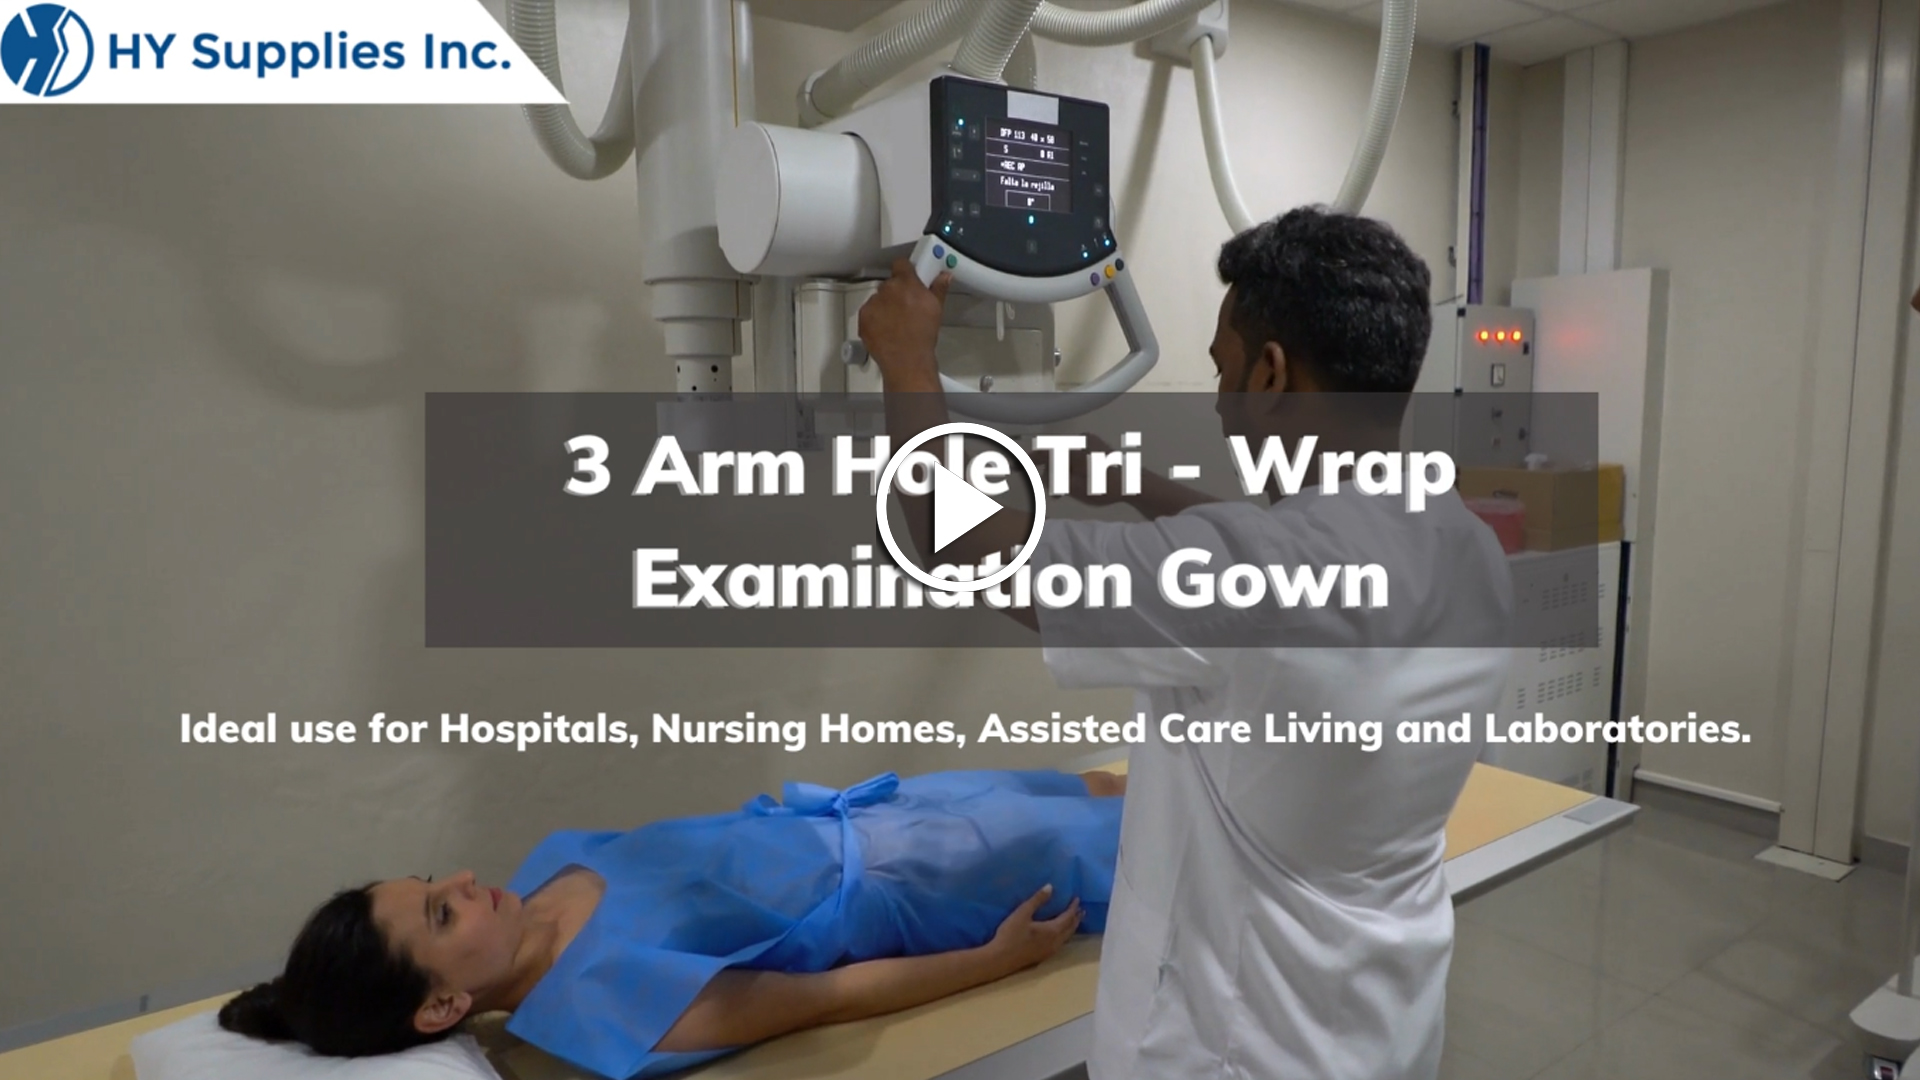 3 Arm Hole Tri - Wrap Examination Gown